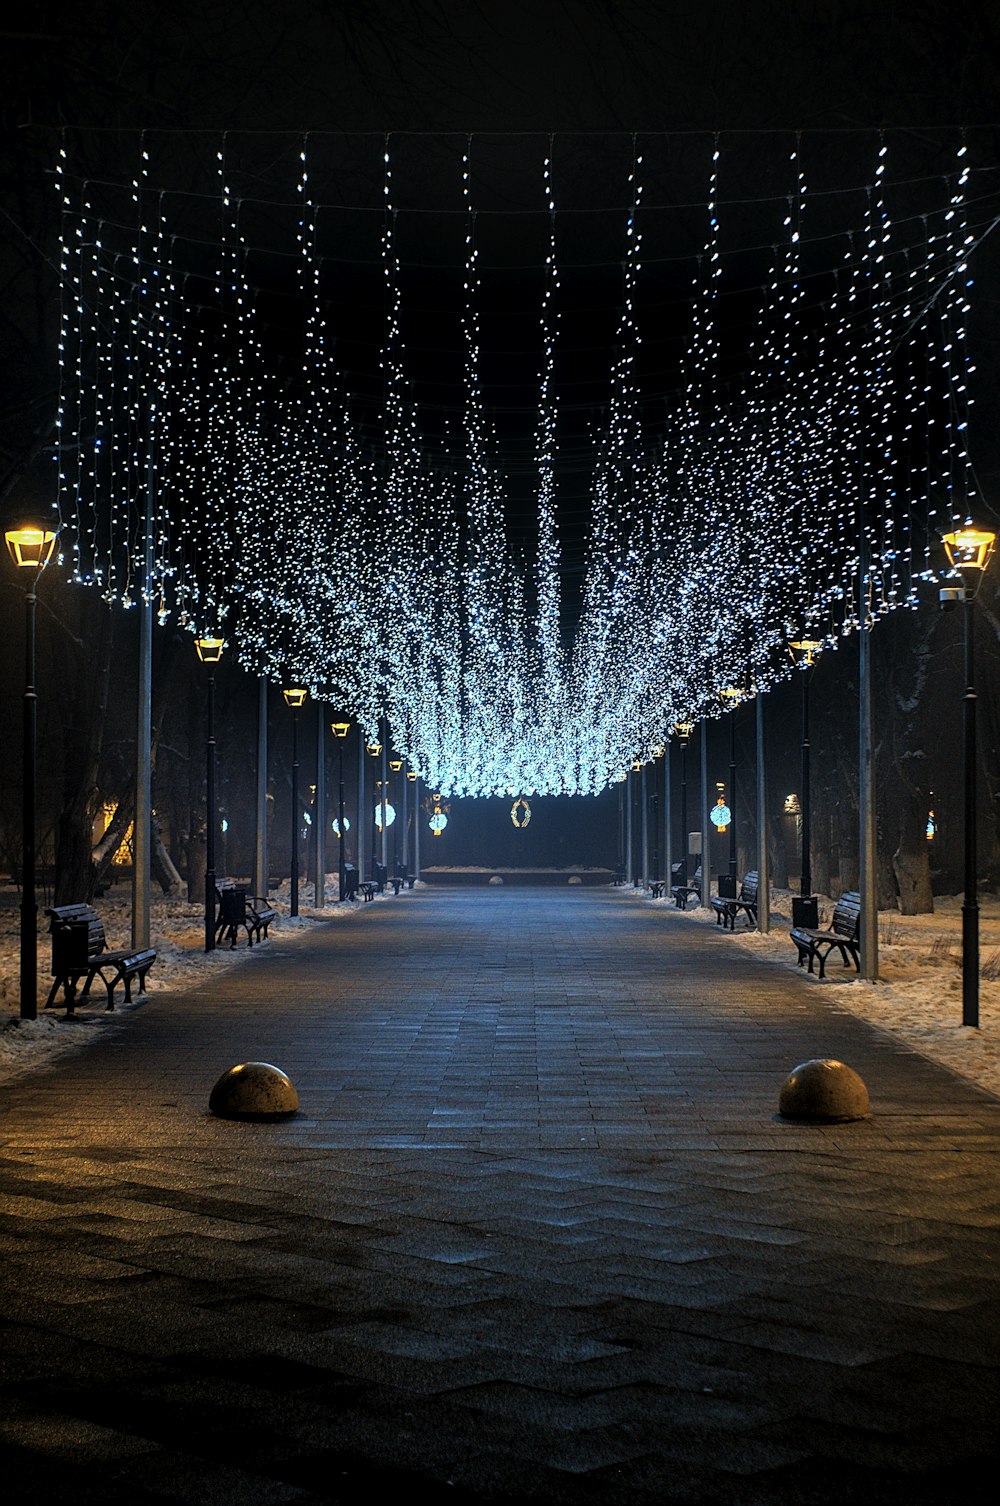 string lights on street during night time photo – Free Image on Unsplash